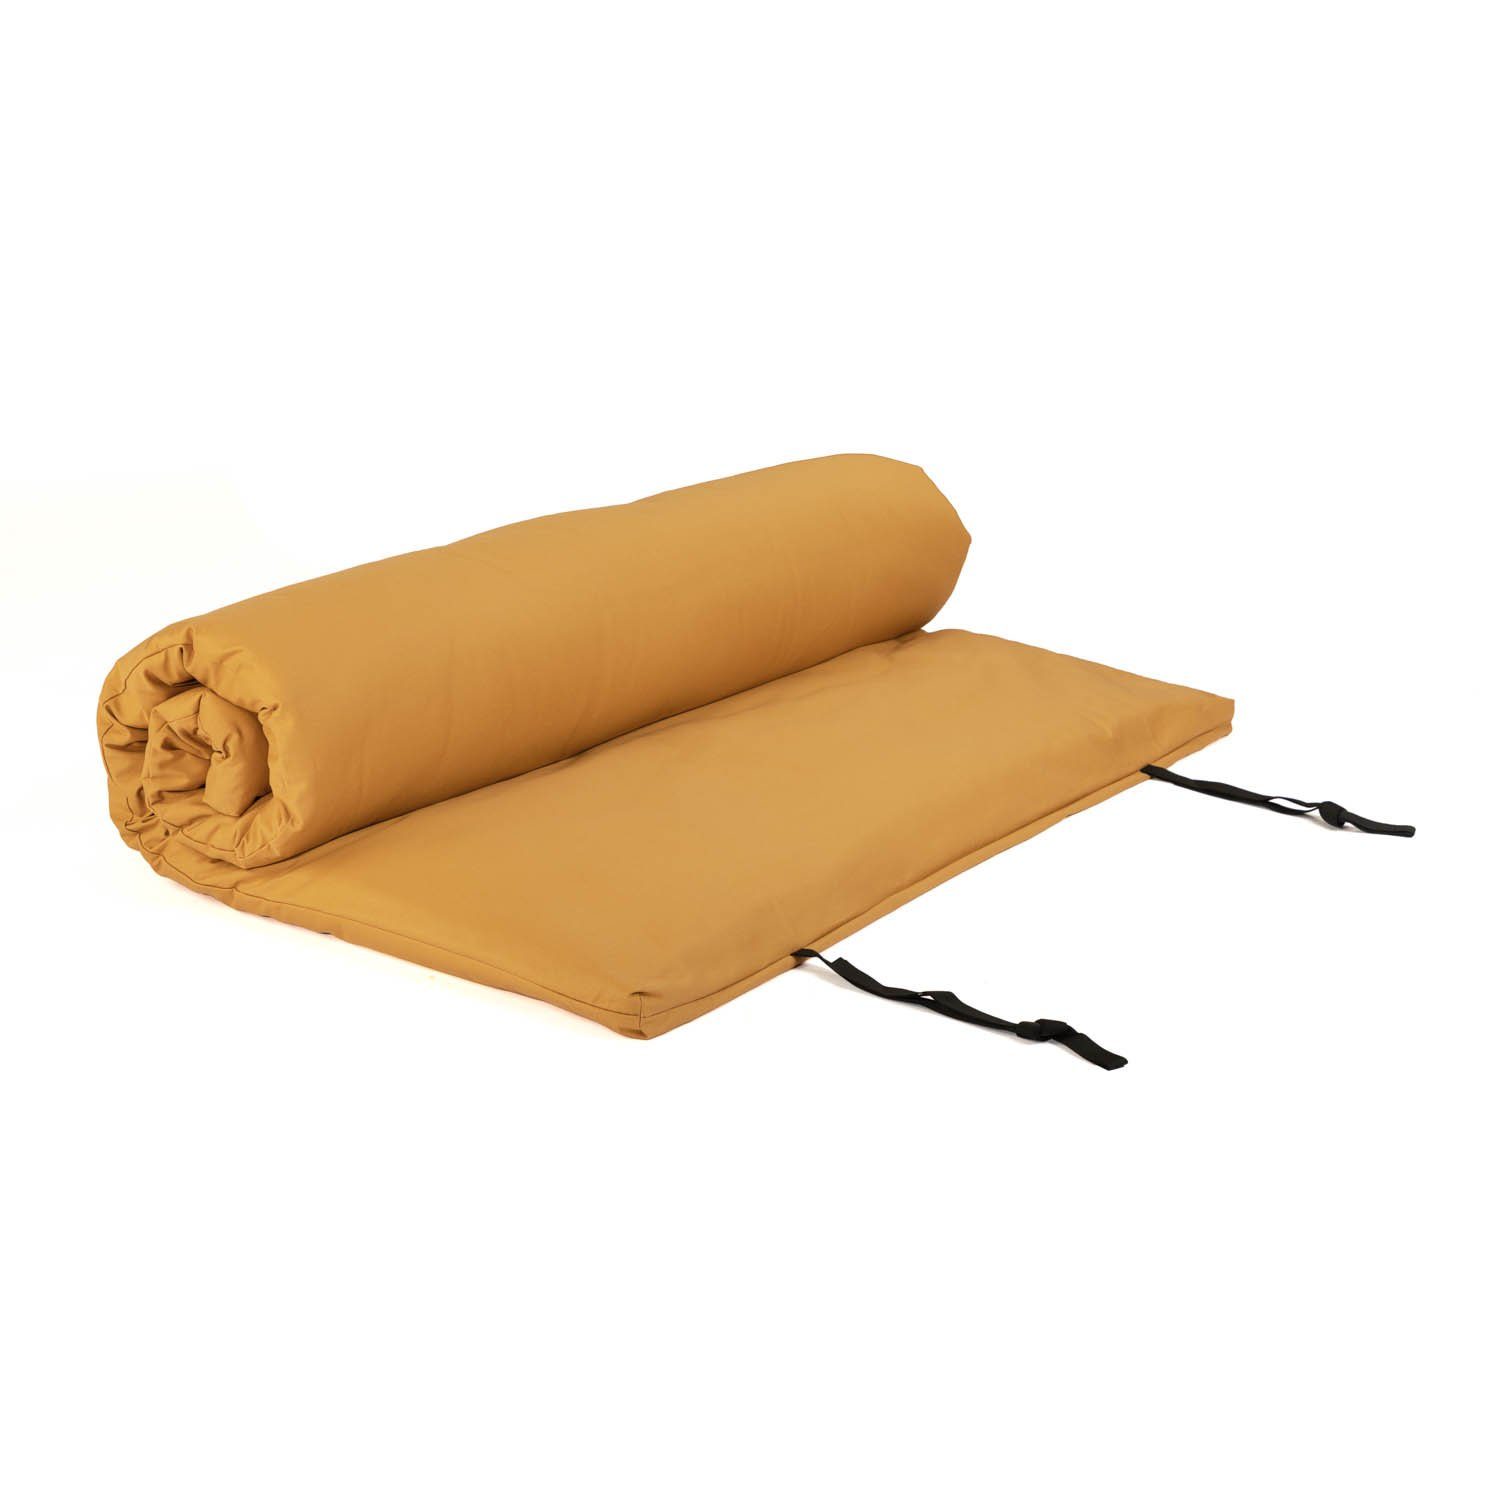 Welltouch Meditationskissen Shiatsumatte mit festem Bezug 100x200 cm, honig-gelb, 4 lagig